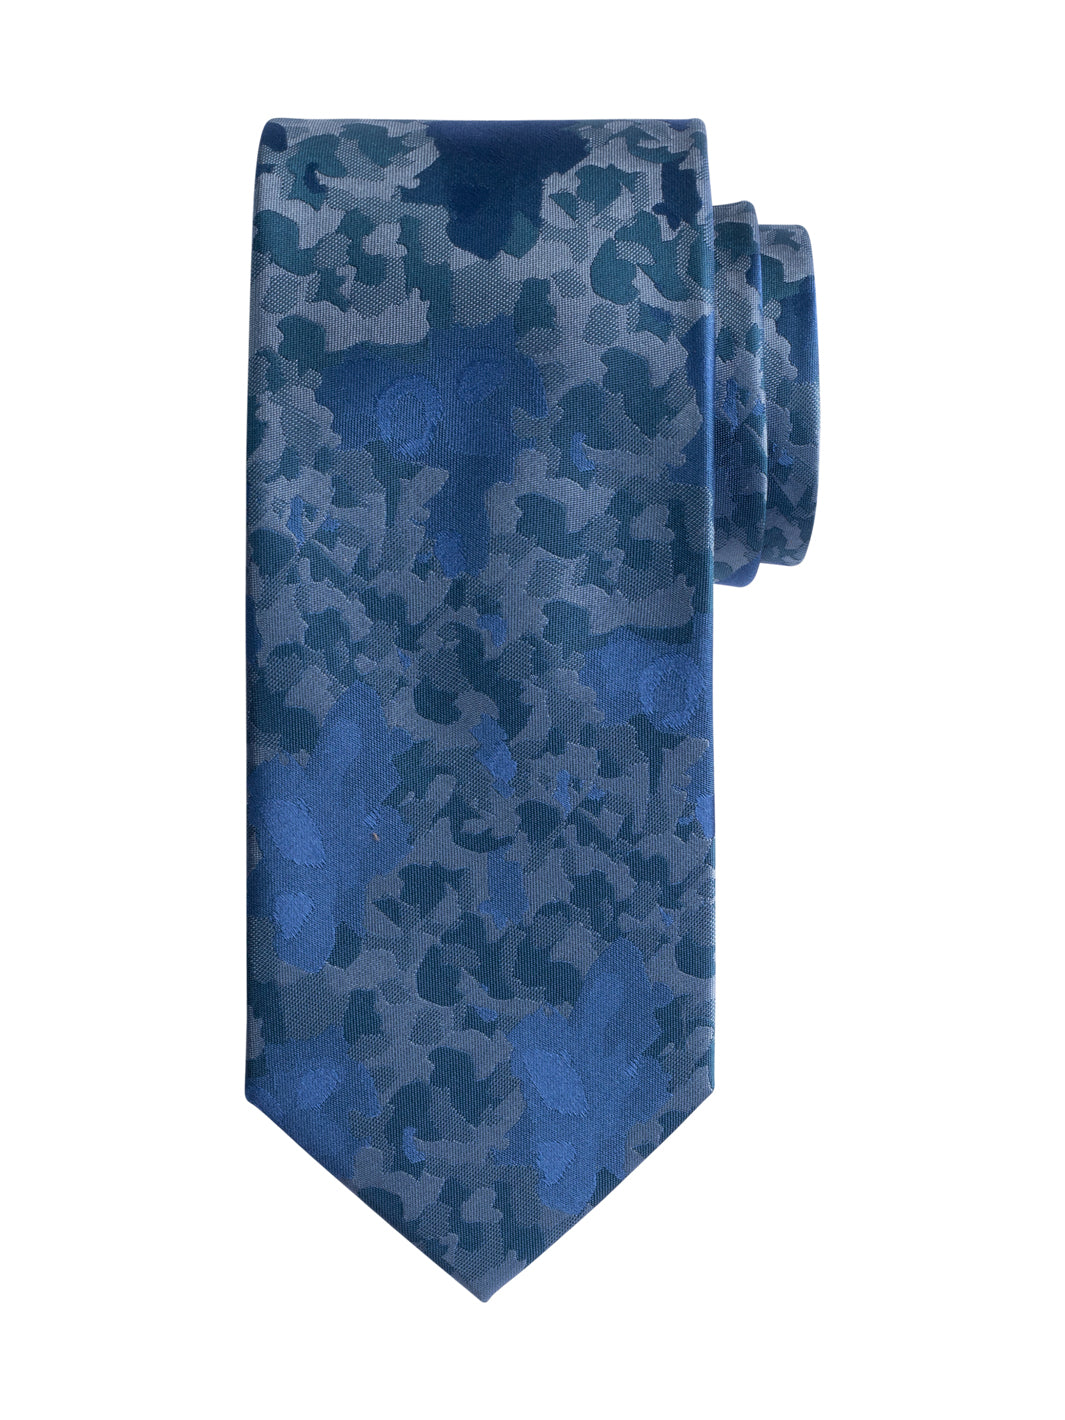 Titanium Mens Blue Camo Patterned Tie